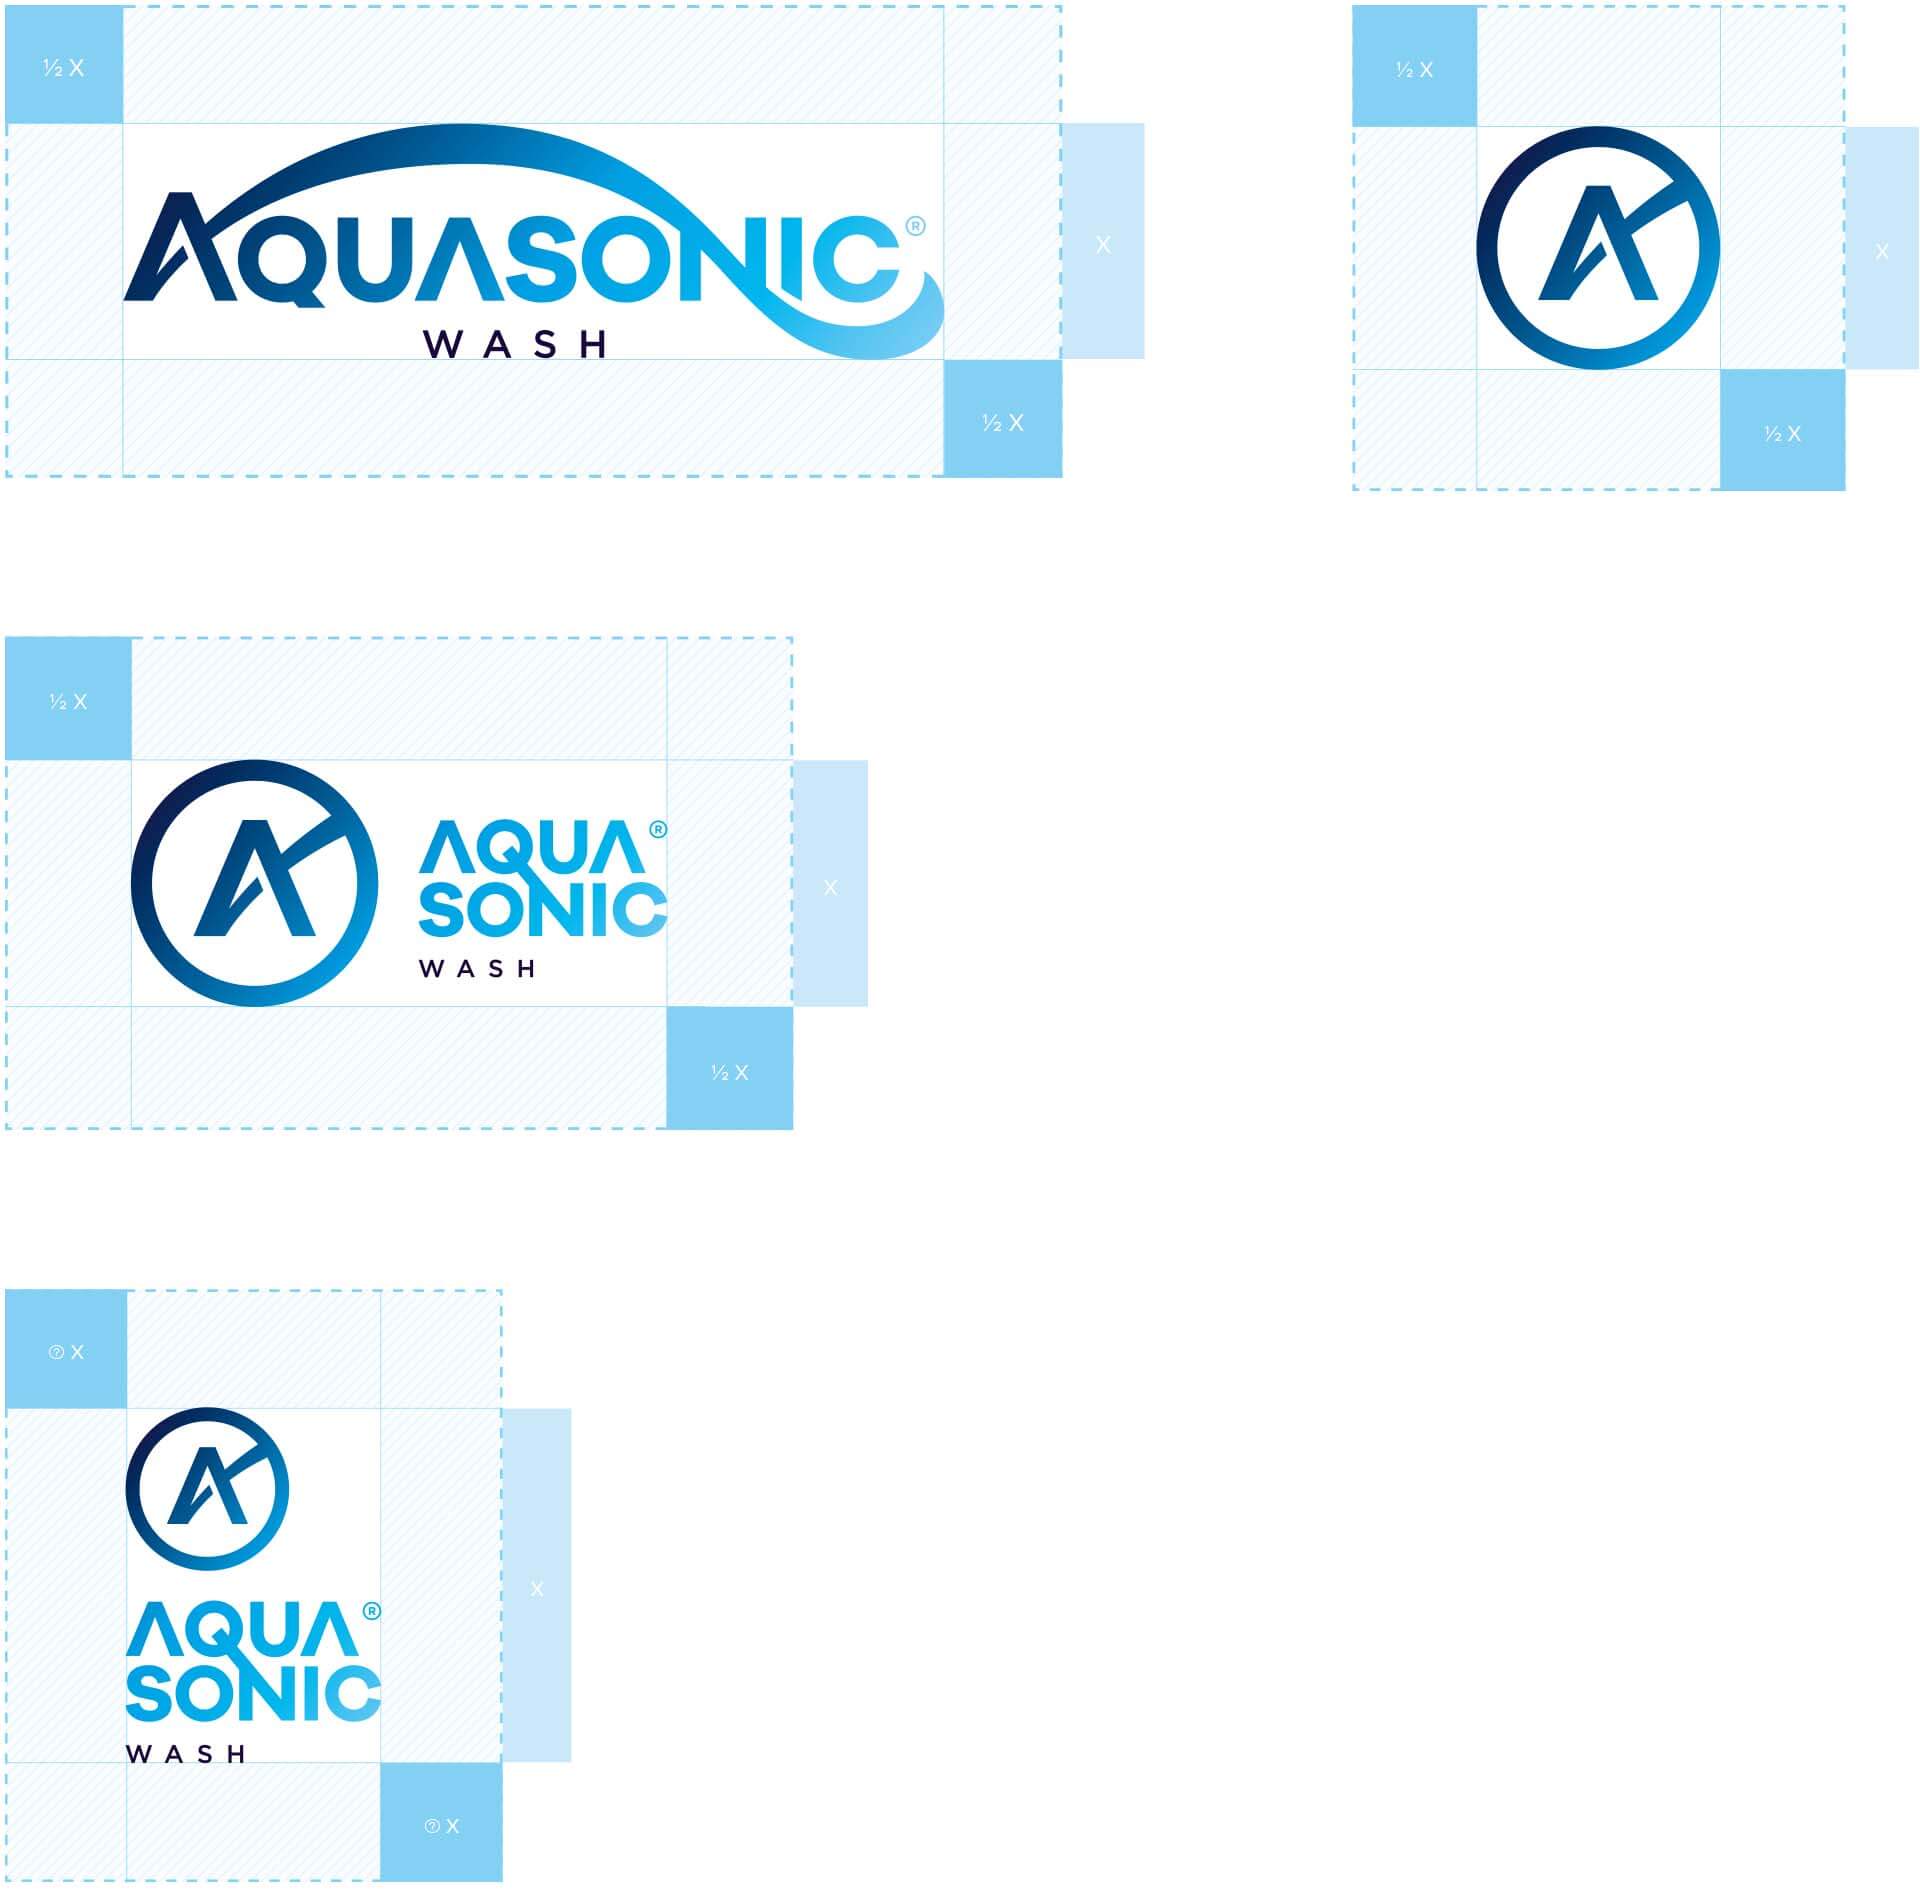 Aquasonic carwash USA logo variations